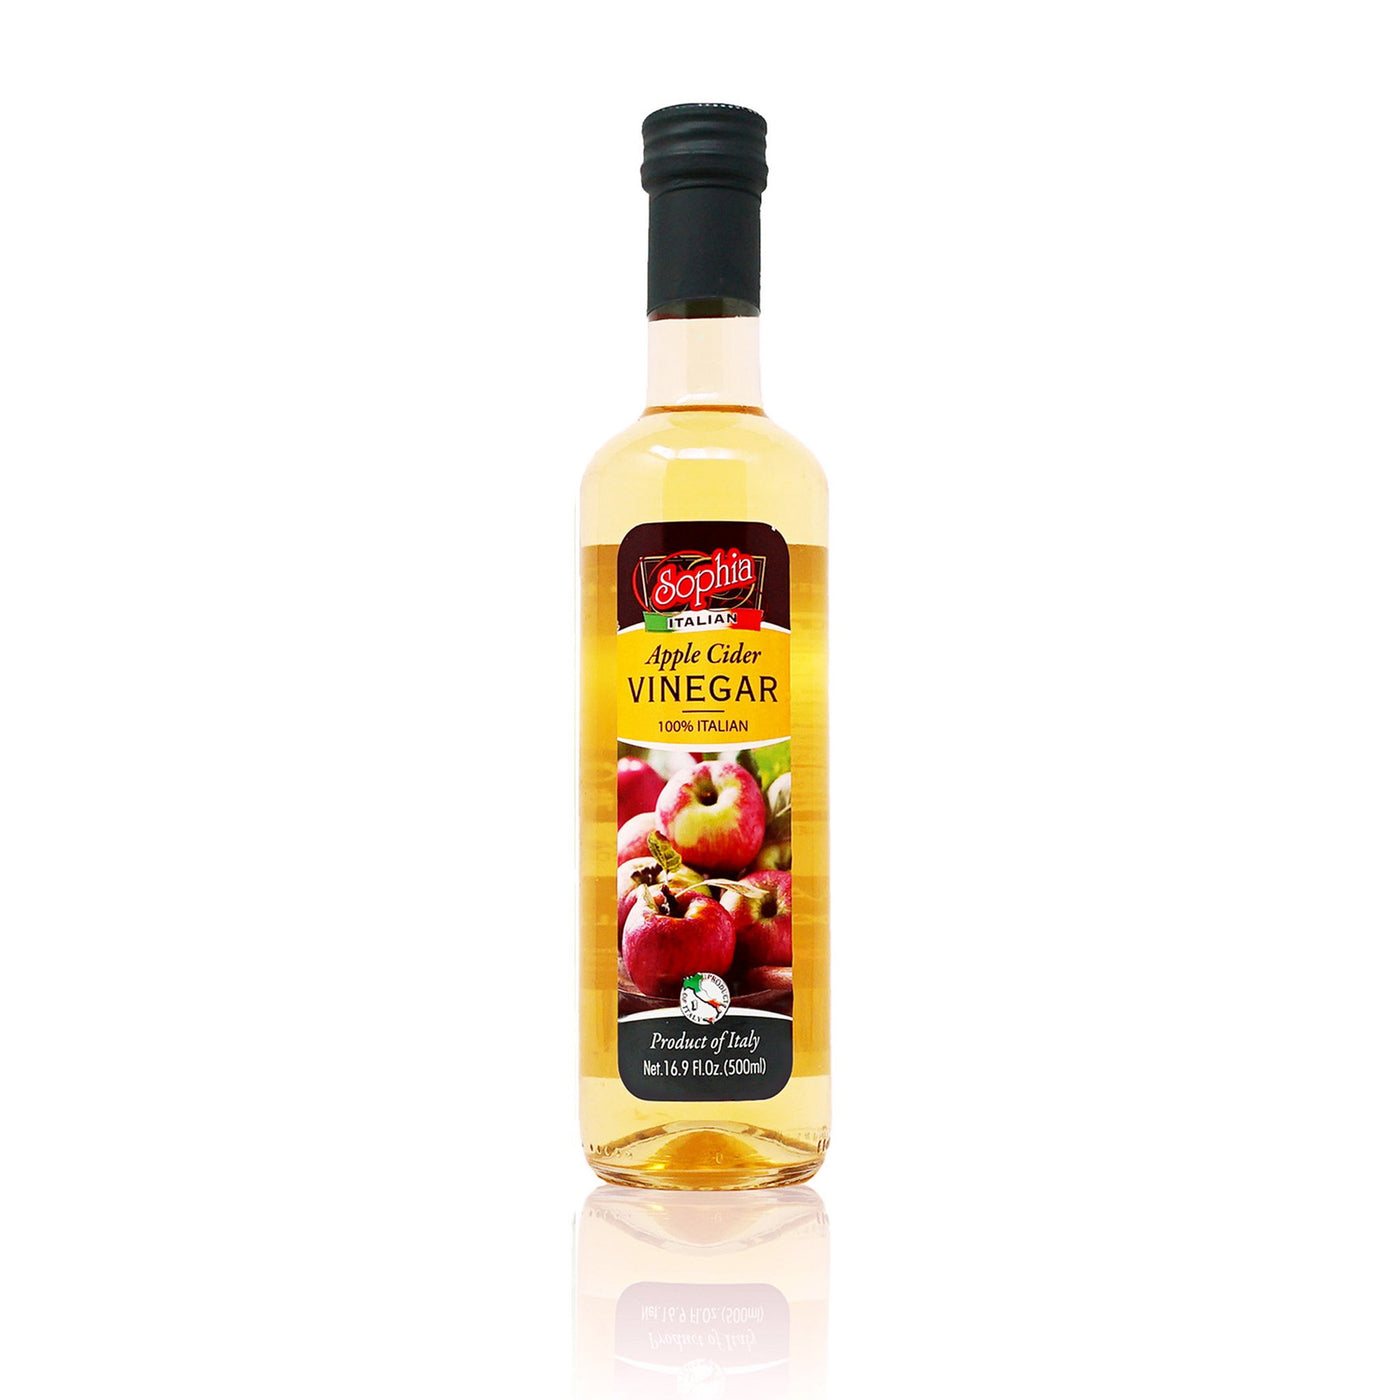 Sophia Vinegar - Italian Apple Cider Vinegar 16.9oz